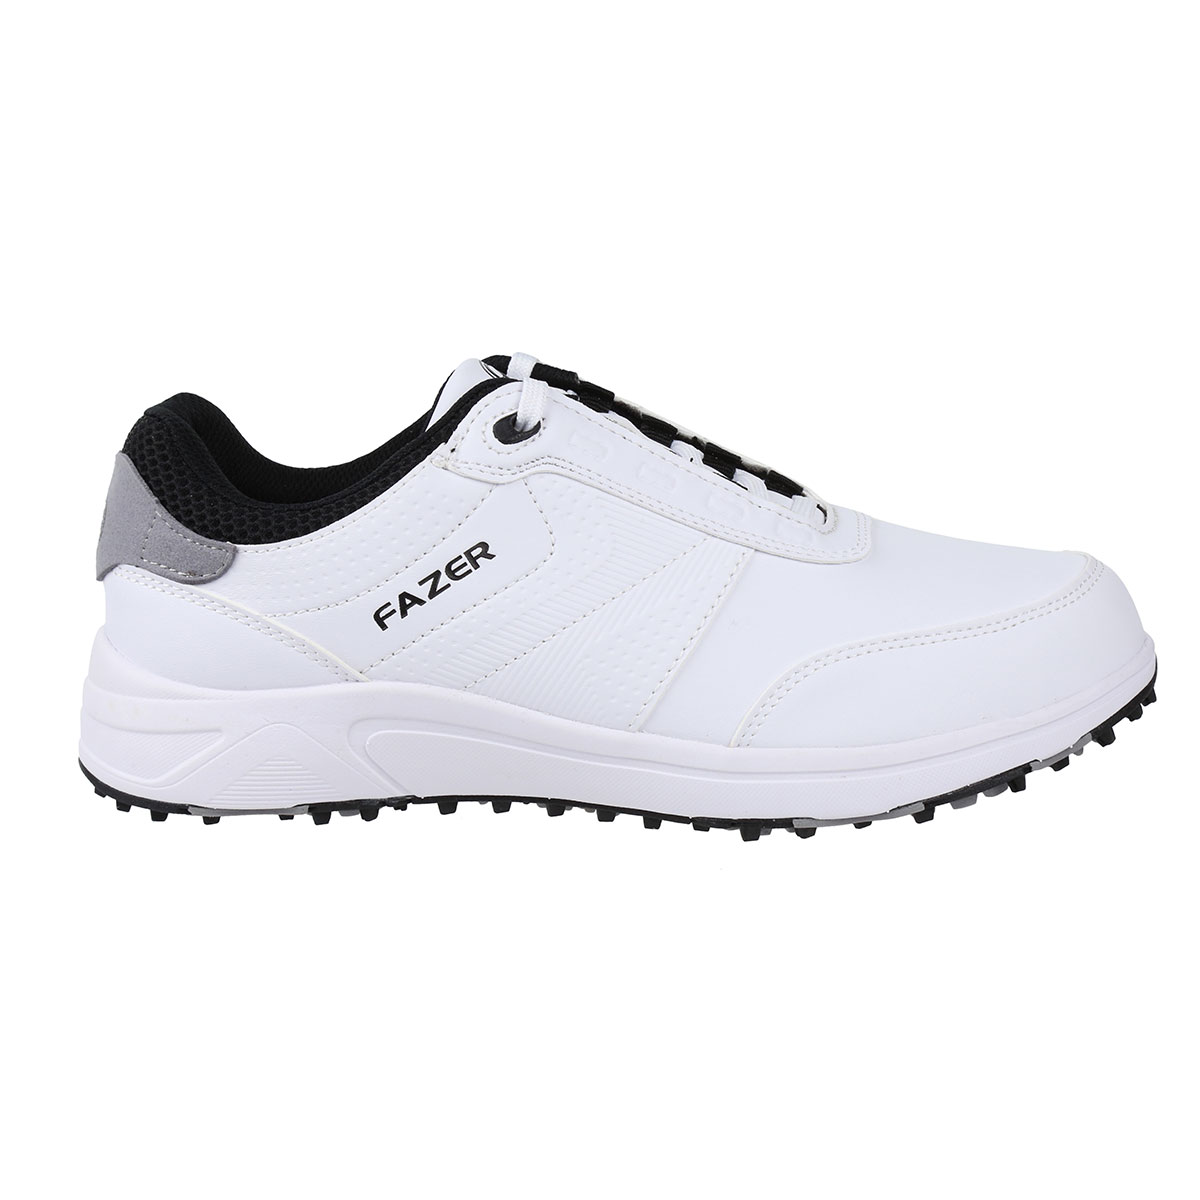 Fazer Men’s Victory Waterproof Spikeless Golf Shoes - White